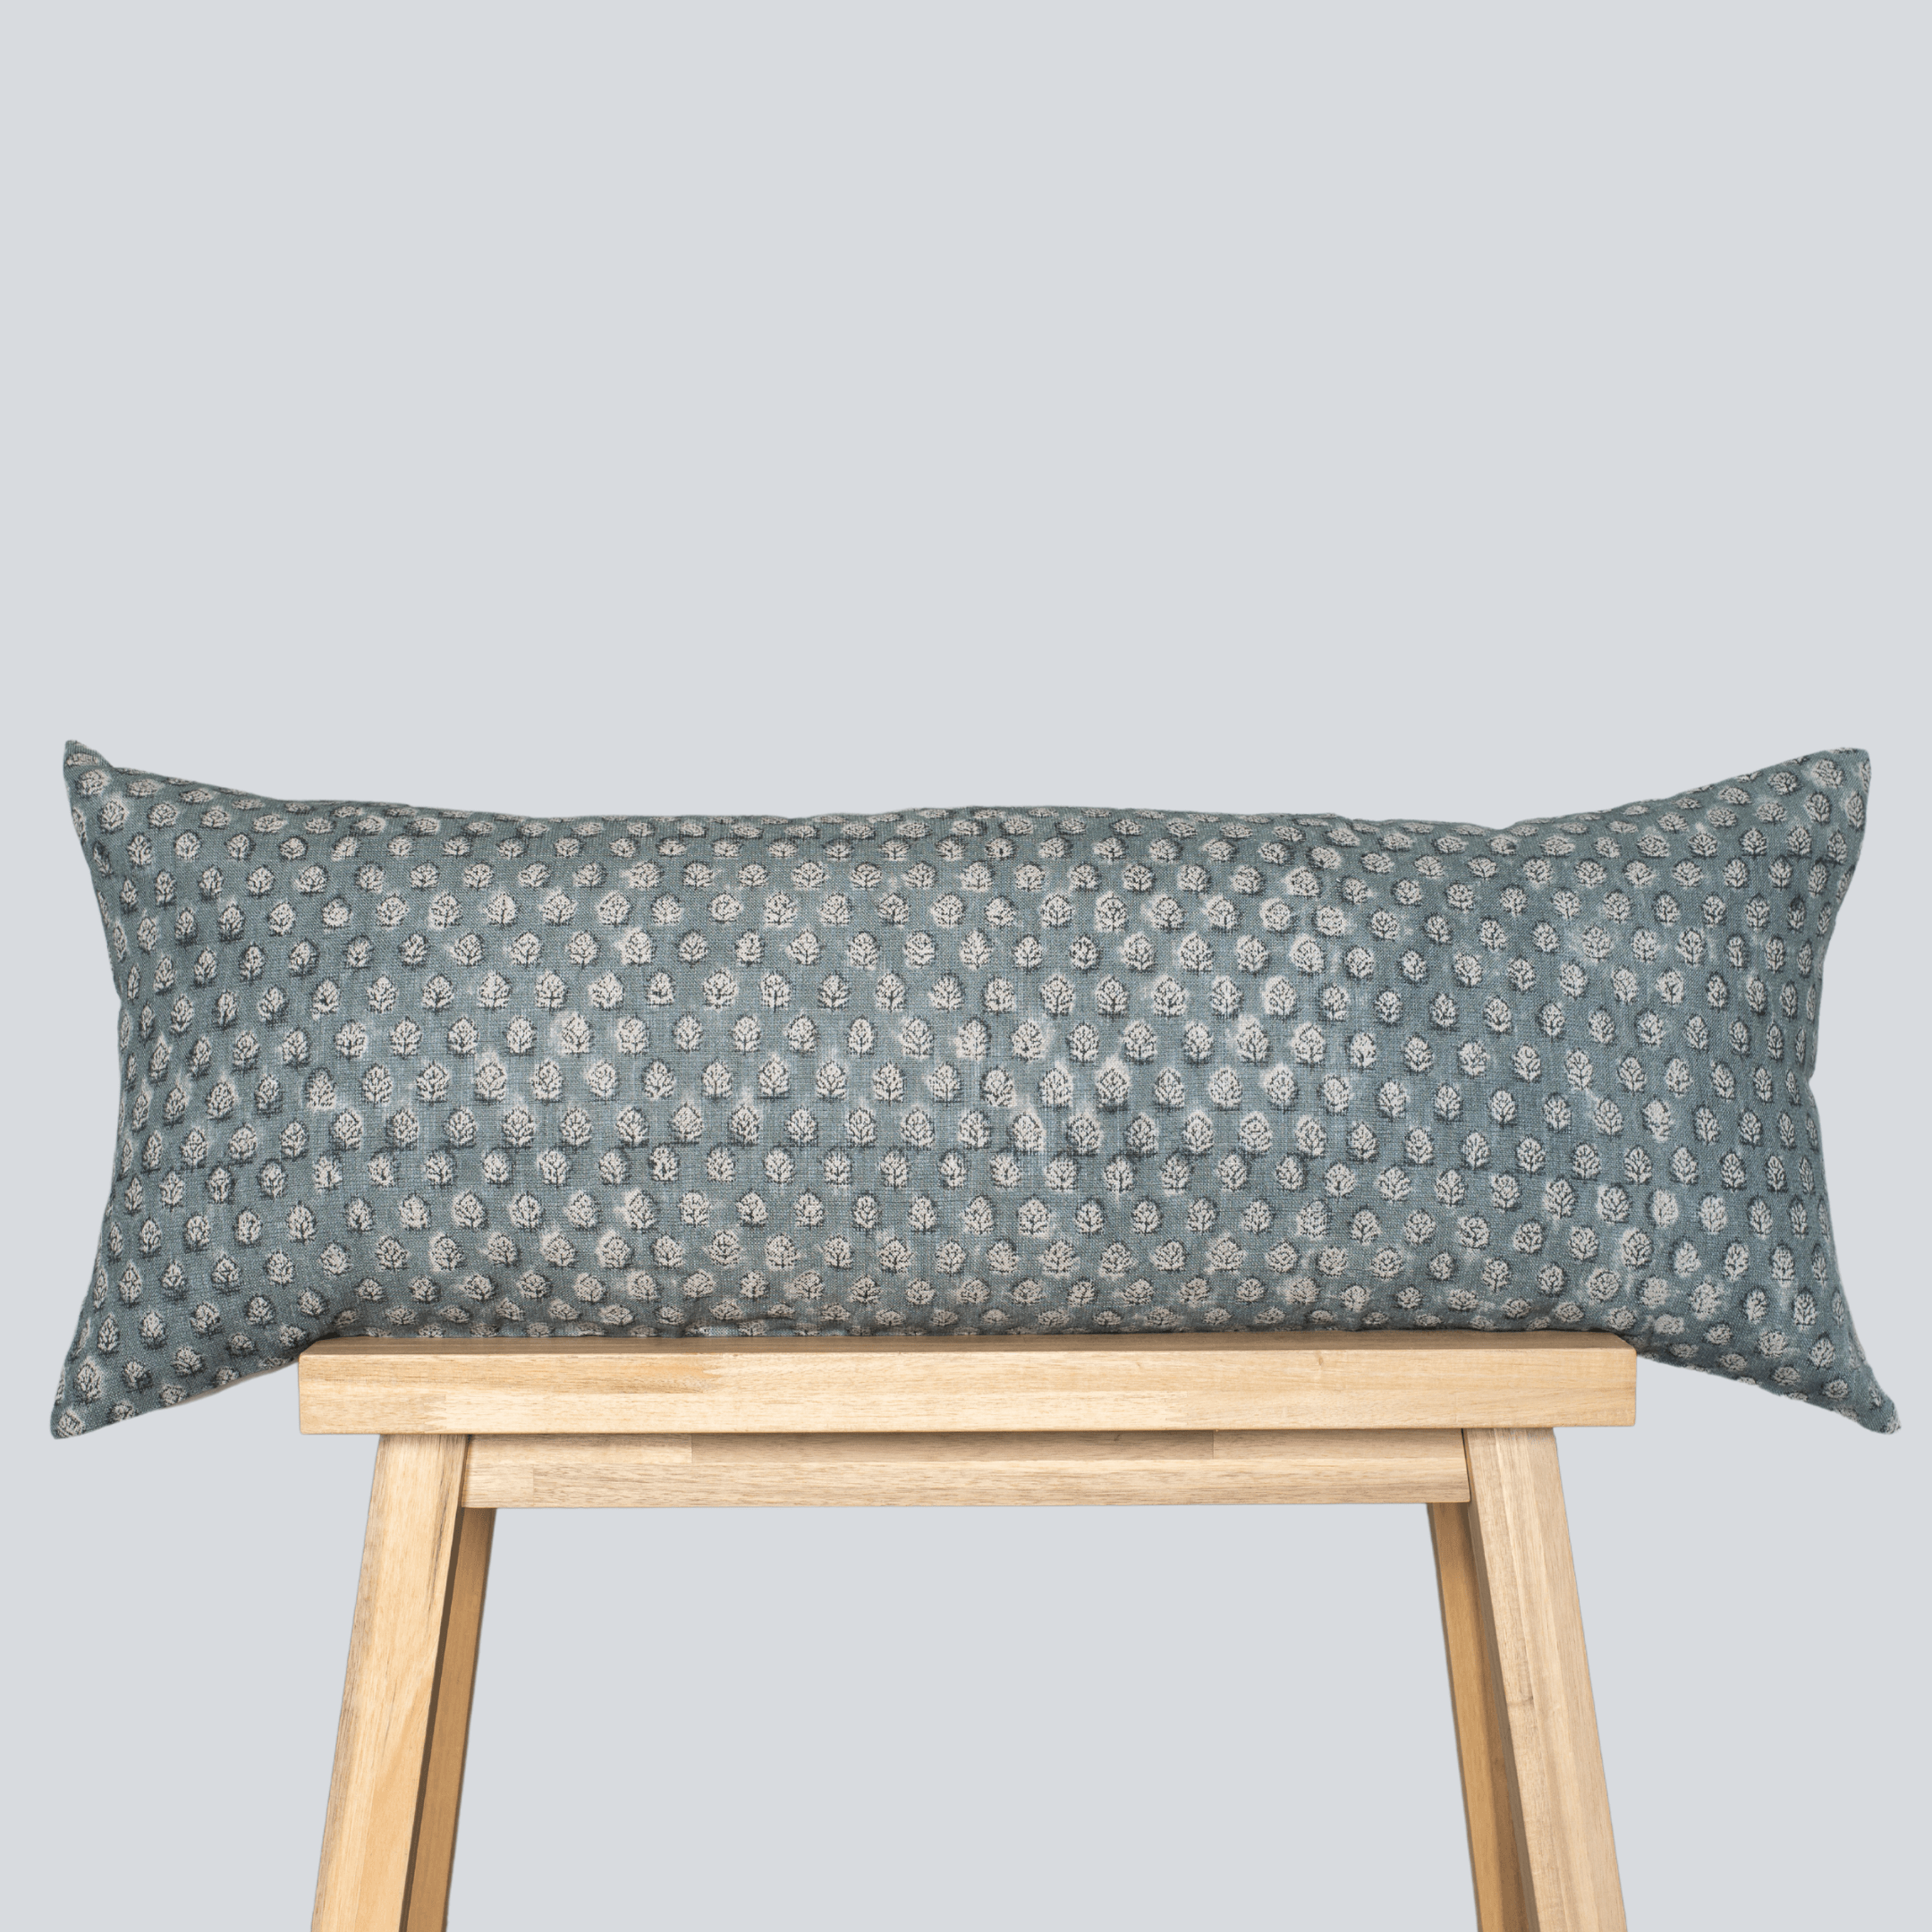 Luna Floral Block Printed Pillow Cover | Blue | Lumbar